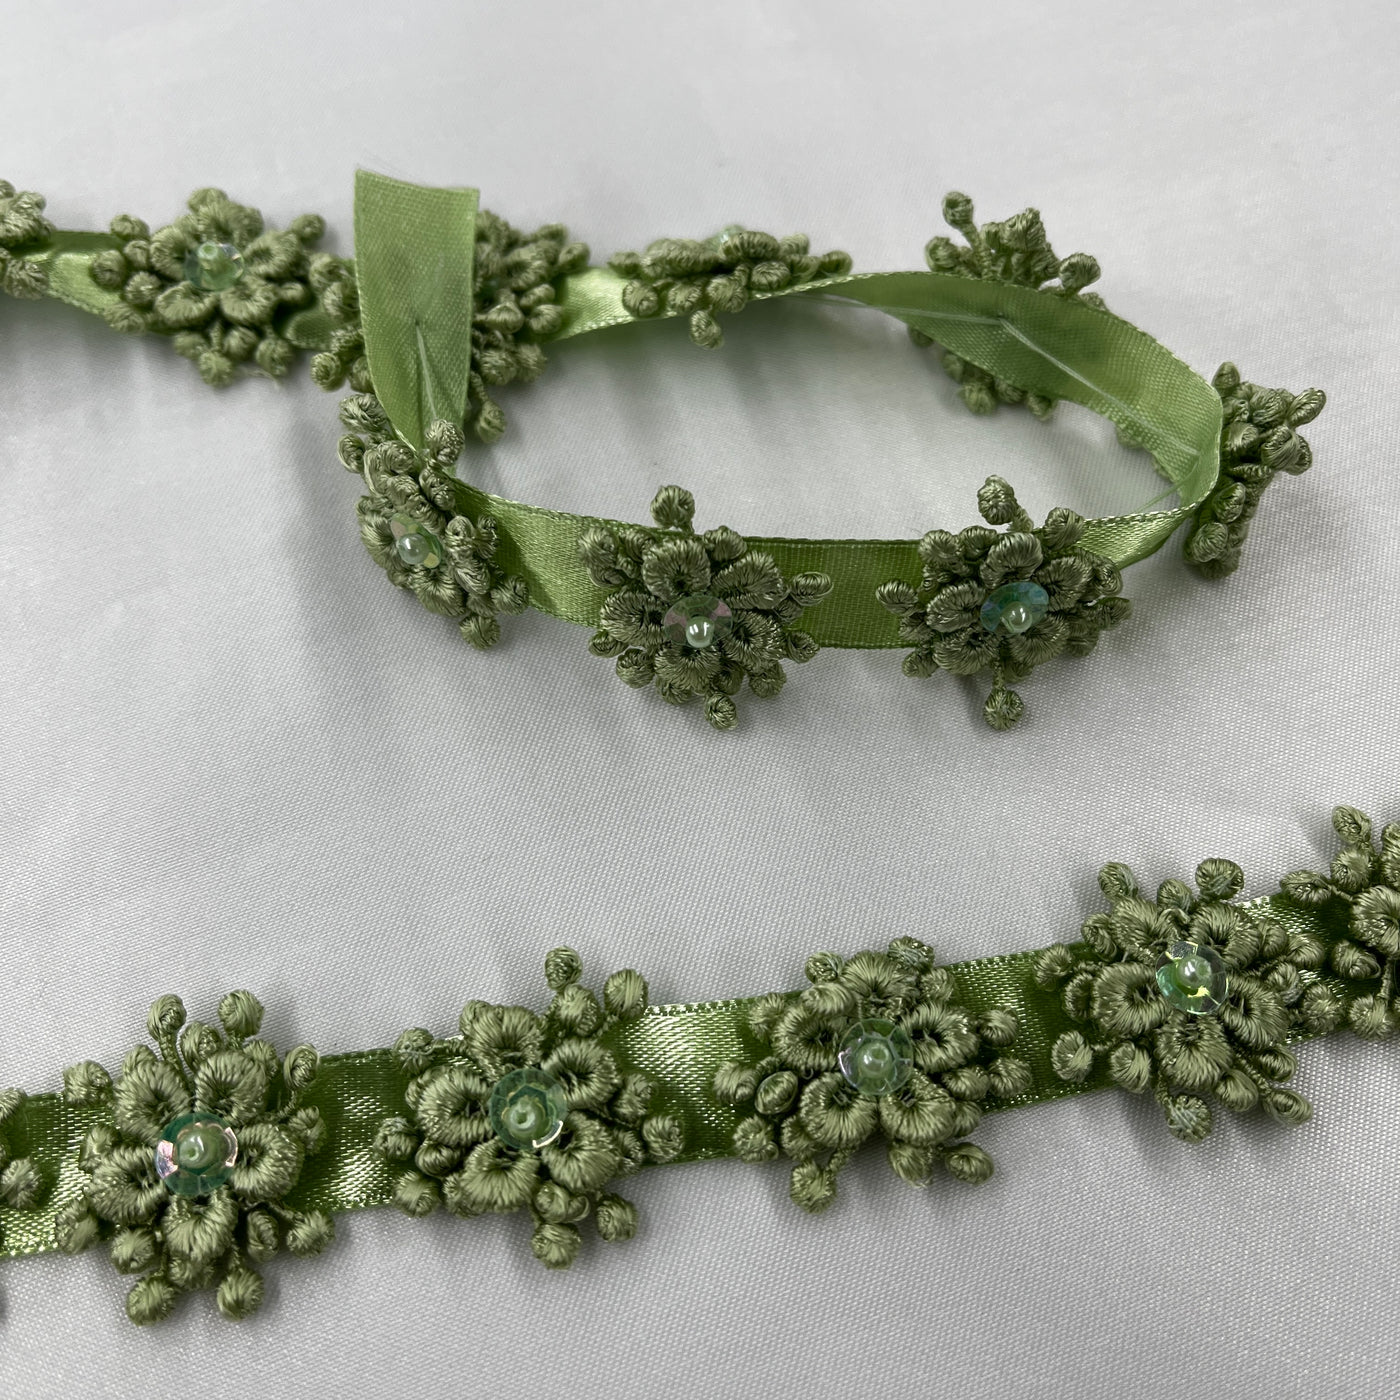 3D Beaded Flower motif on Ribbon Trim Peach Lace Usa